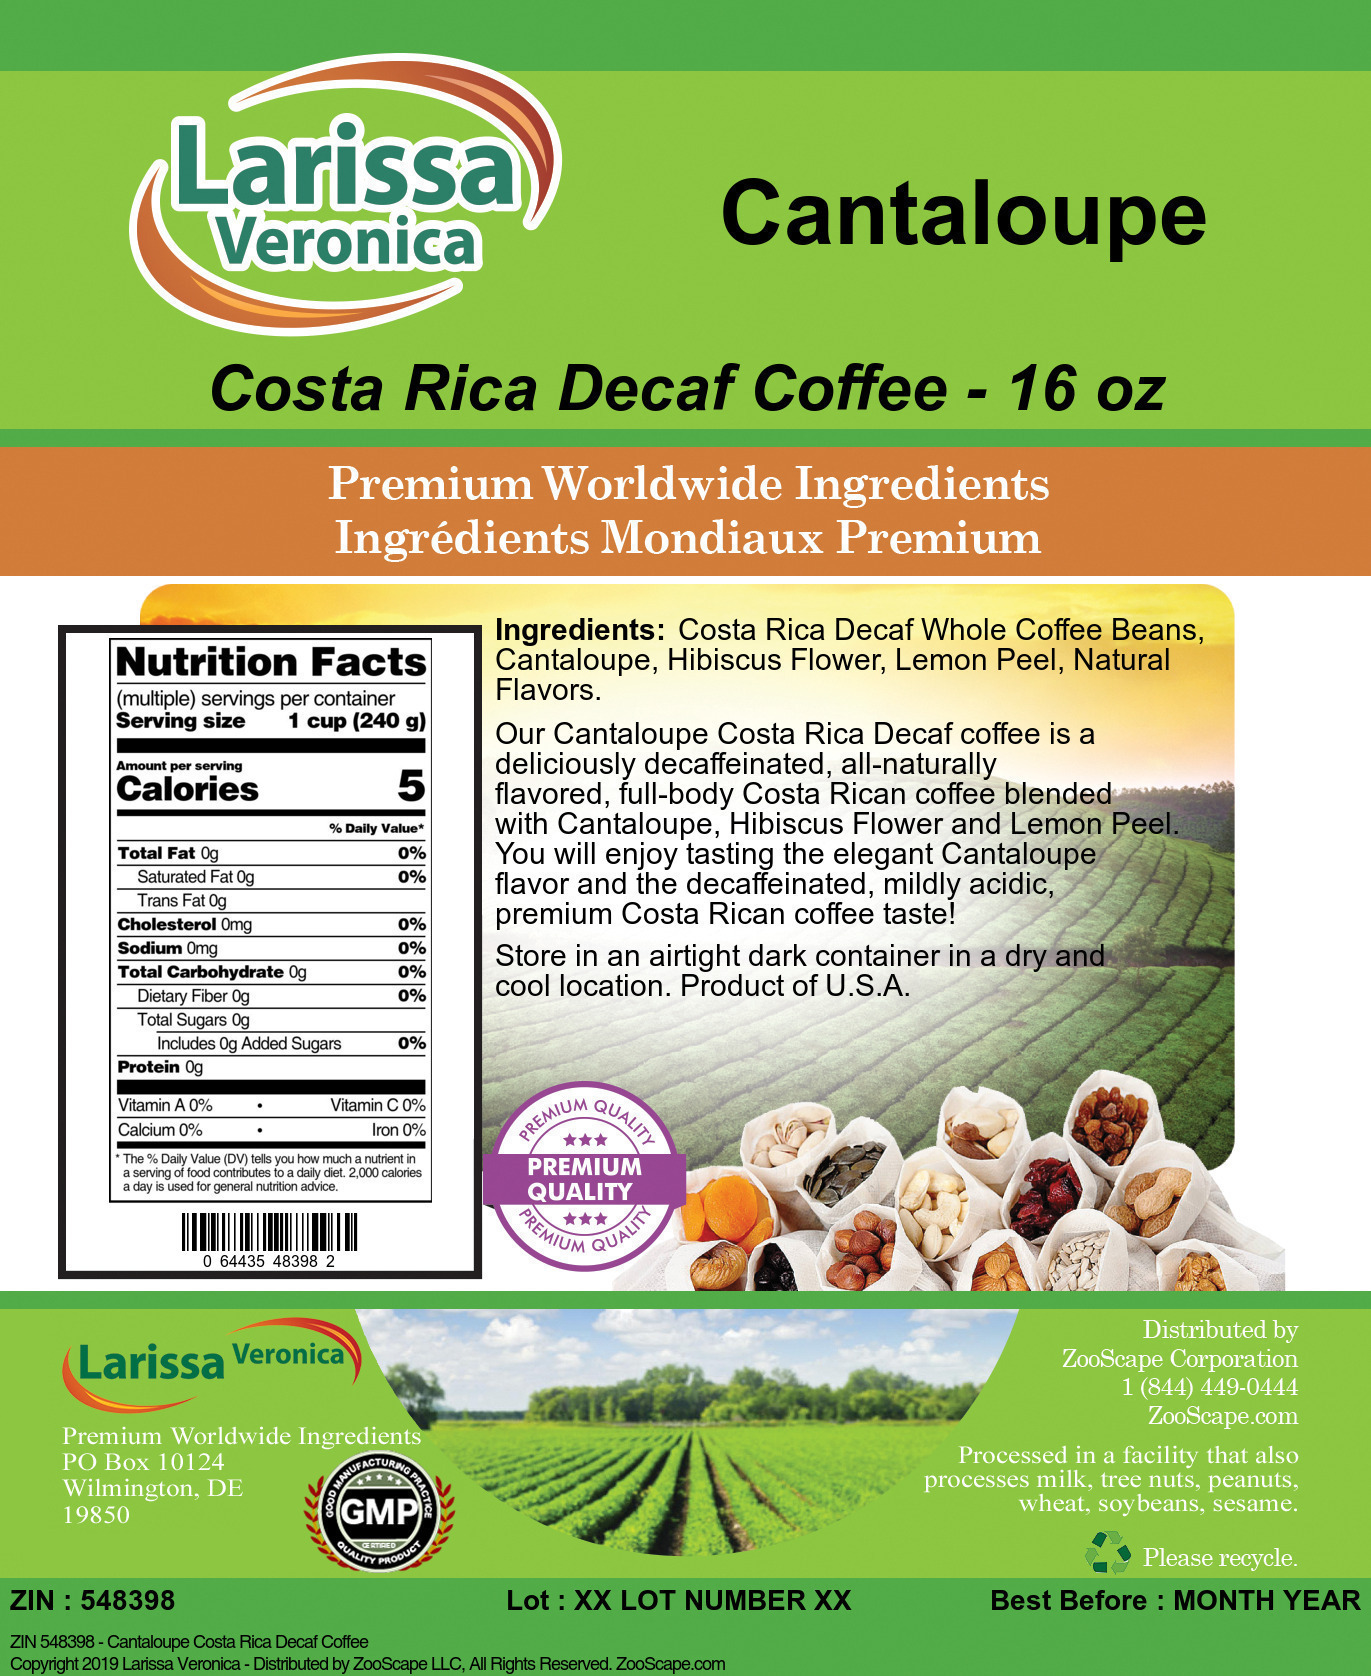 Cantaloupe Costa Rica Decaf Coffee - Label